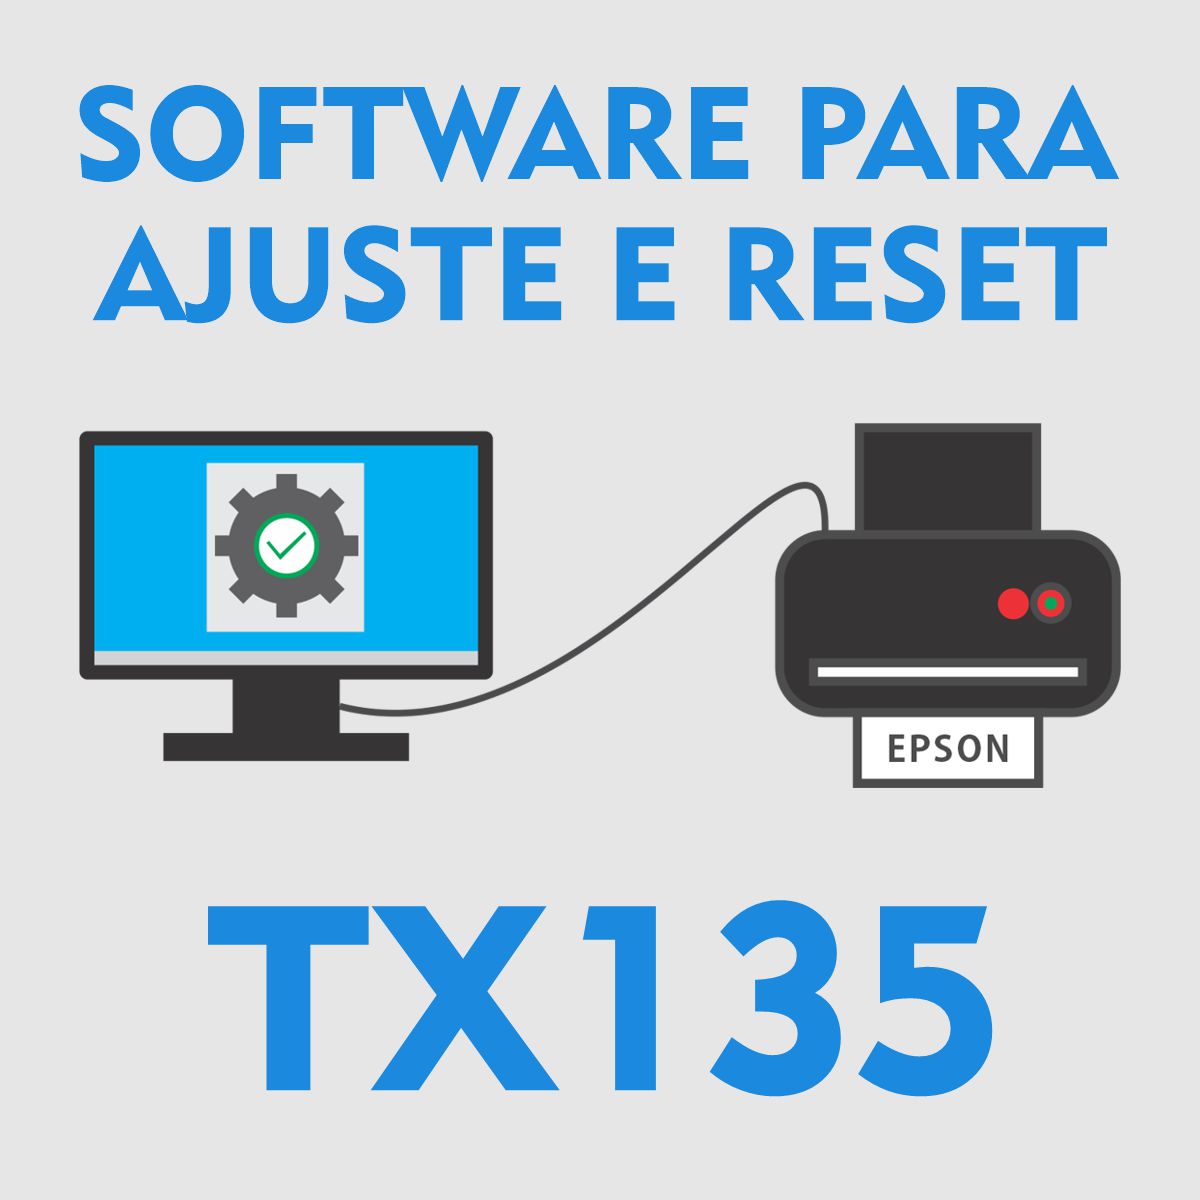 EPSON TX135 | SOFTWARE PARA AJUSTES E RESET DAS ALMOFADAS